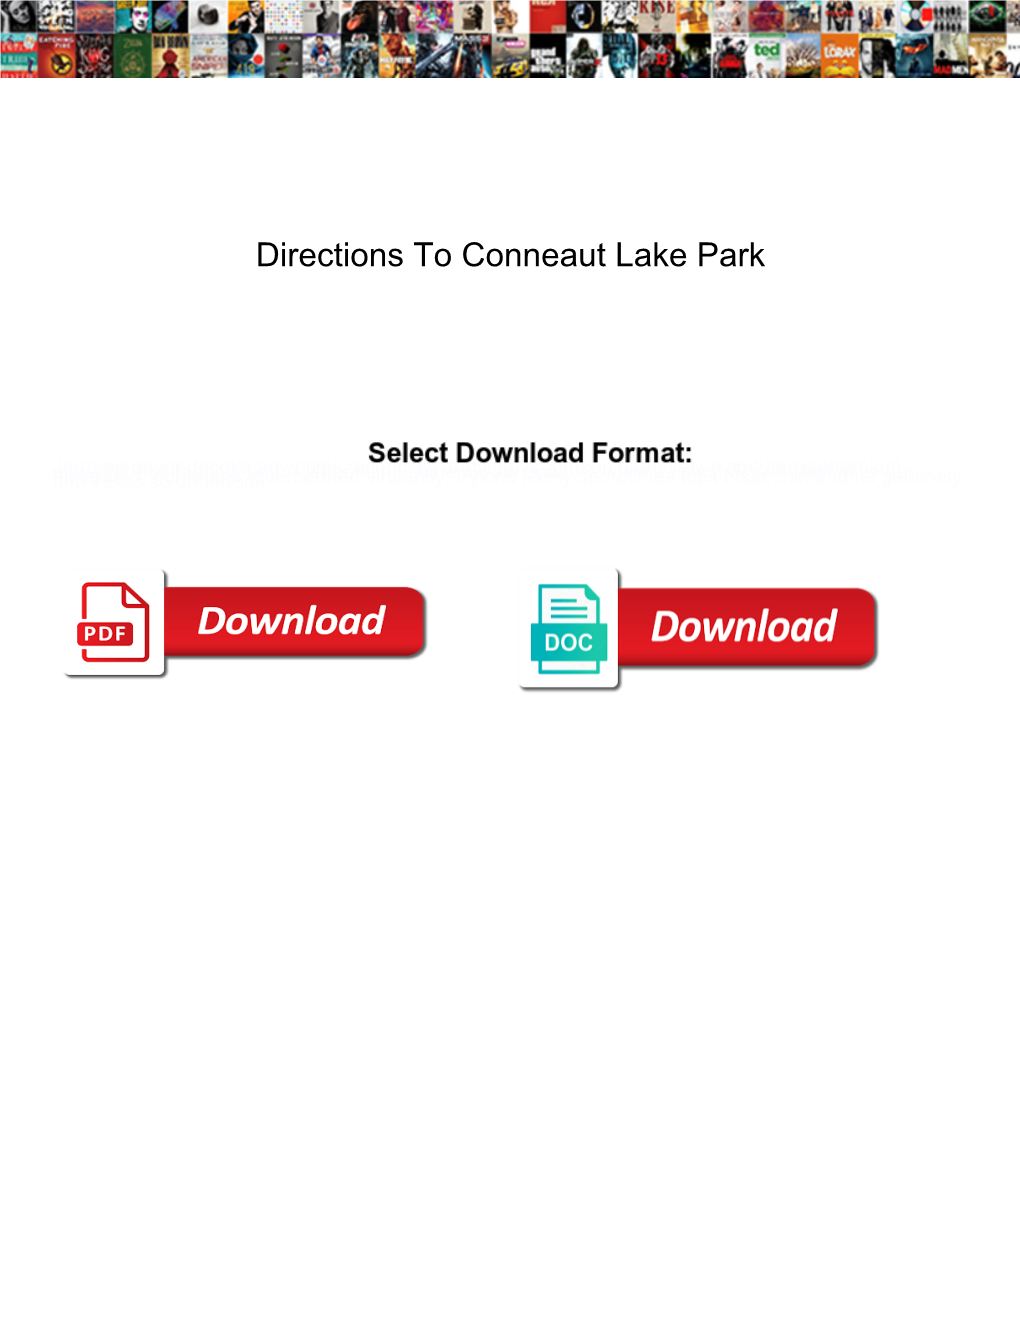 Directions to Conneaut Lake Park